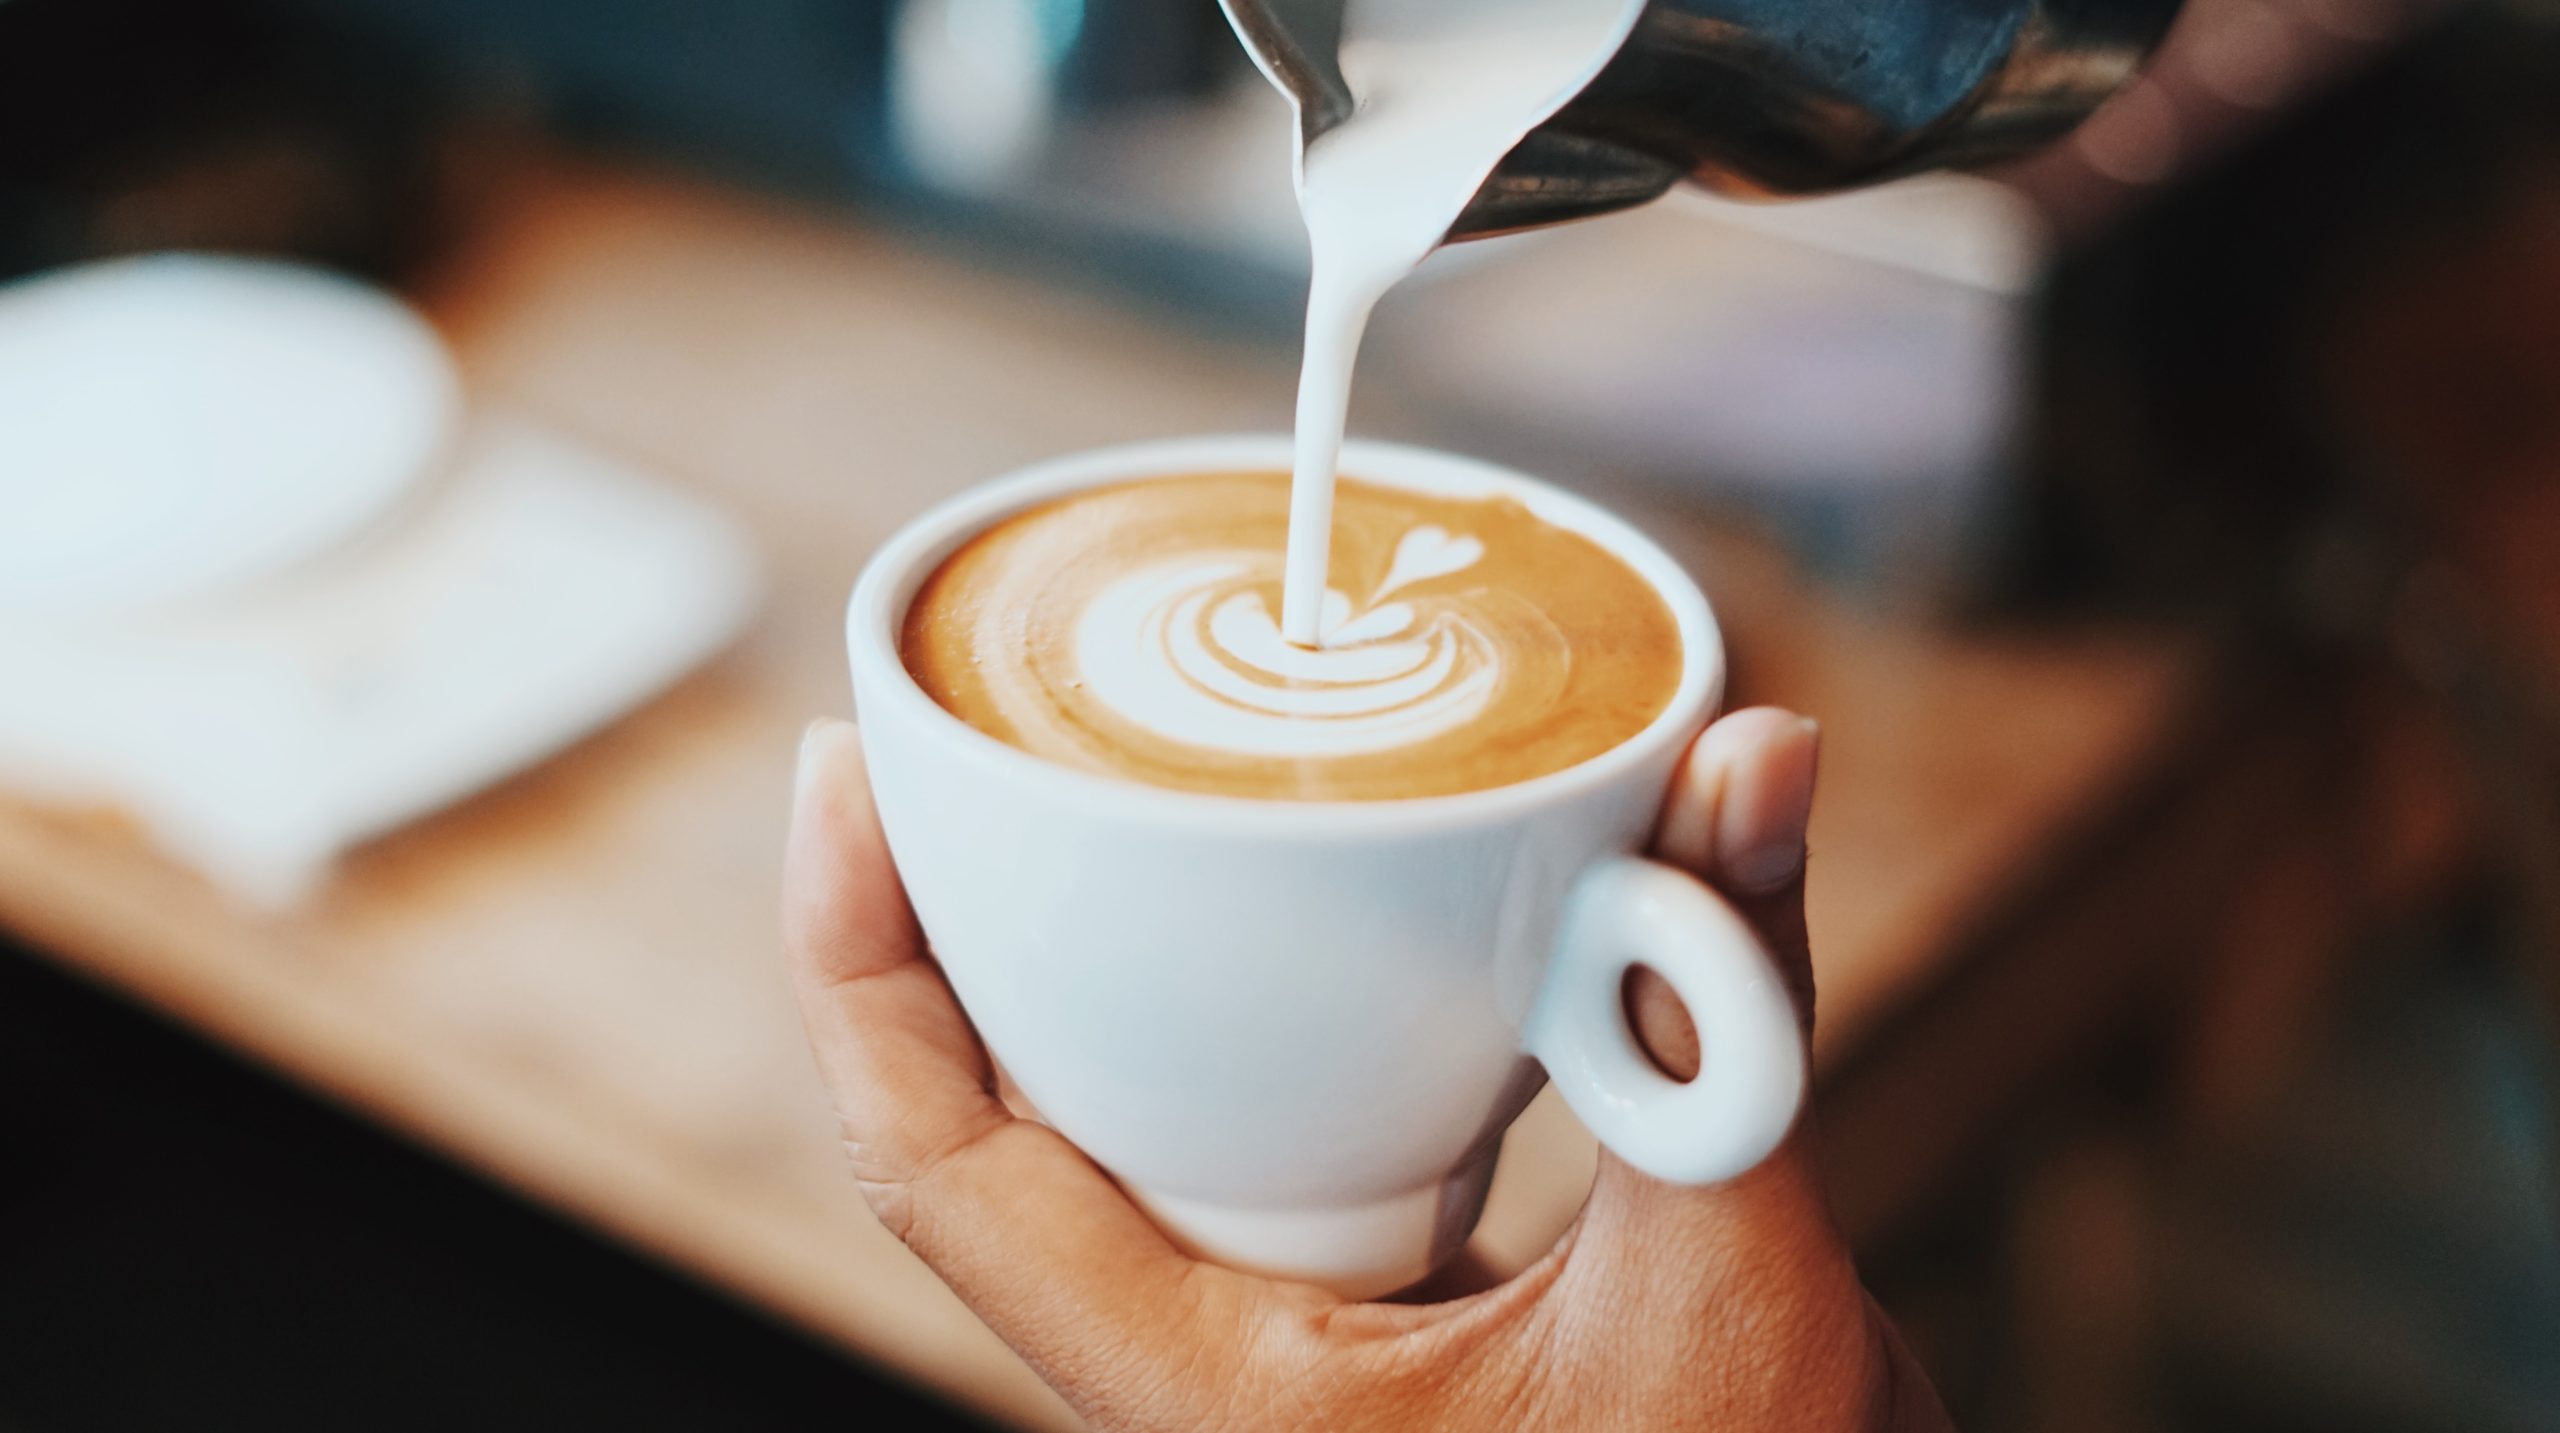 A person pouring milk into a latte.